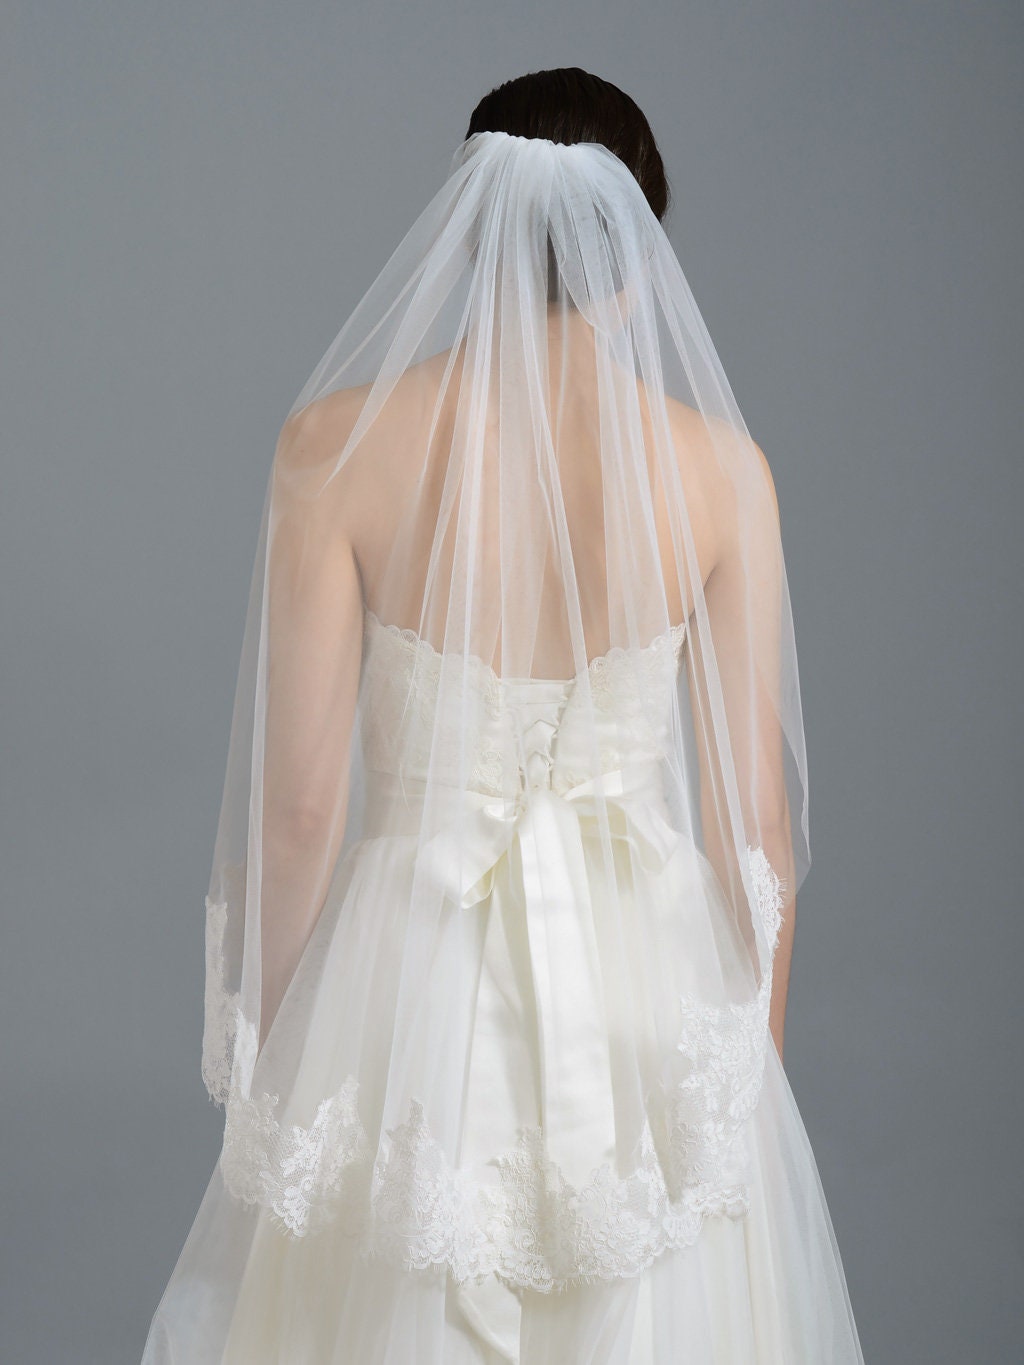 Wedding veil, bridal veil, wedding veil ivory, wedding veil lace trim, alencon lace veil